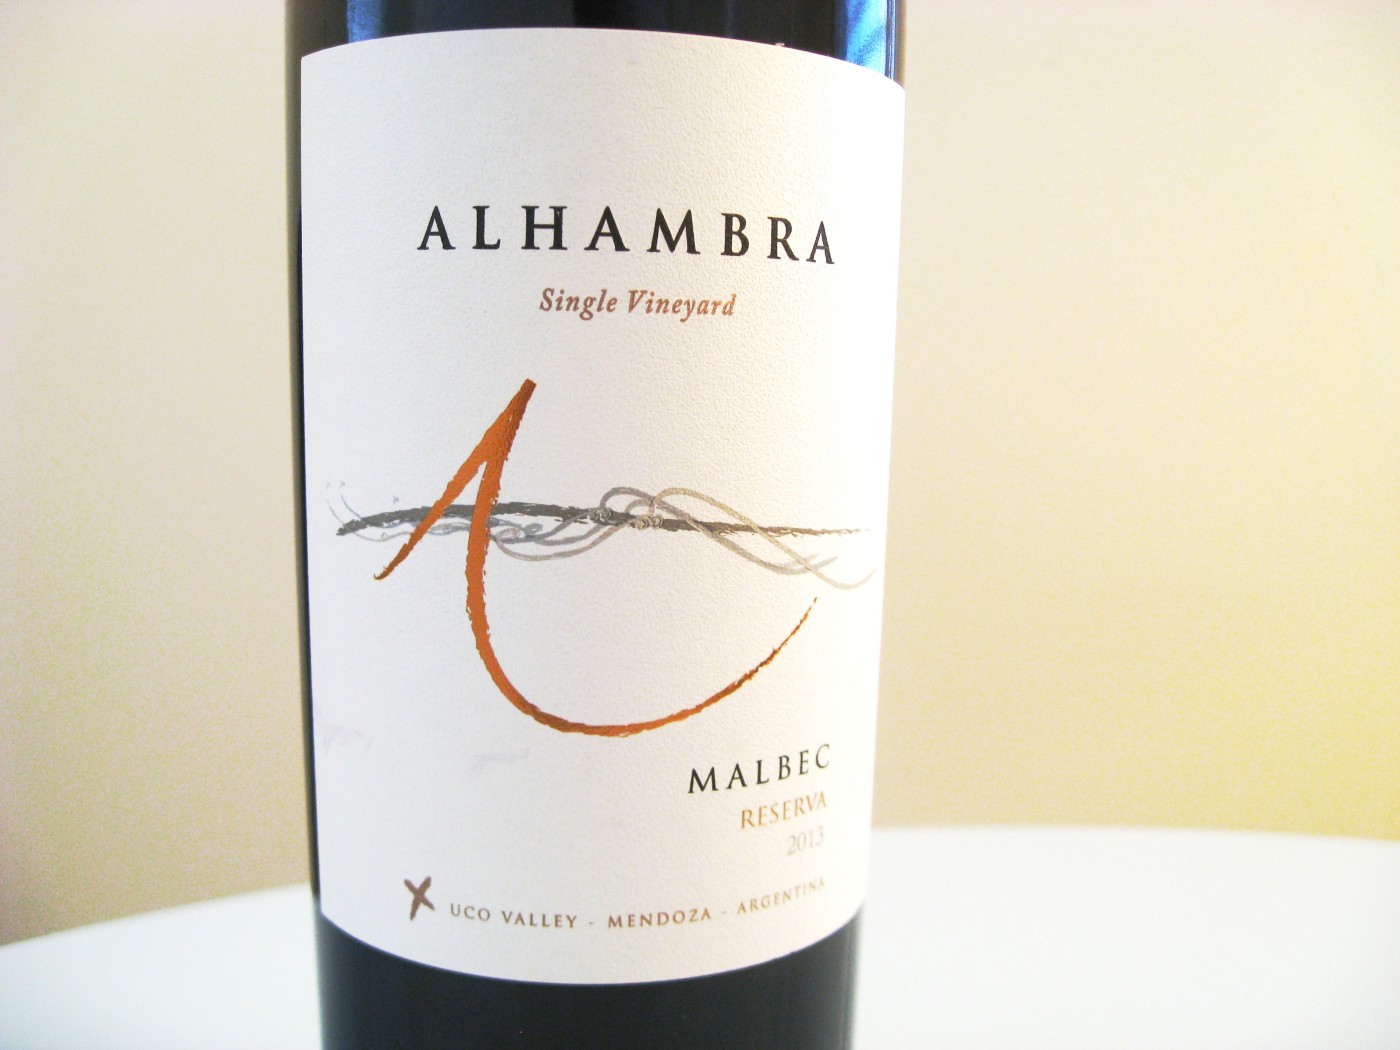 Alhambra, Single Vineyard, Malbec Reserva 2013, Uco Valley, Mendoza, Argentina, Wine Casual